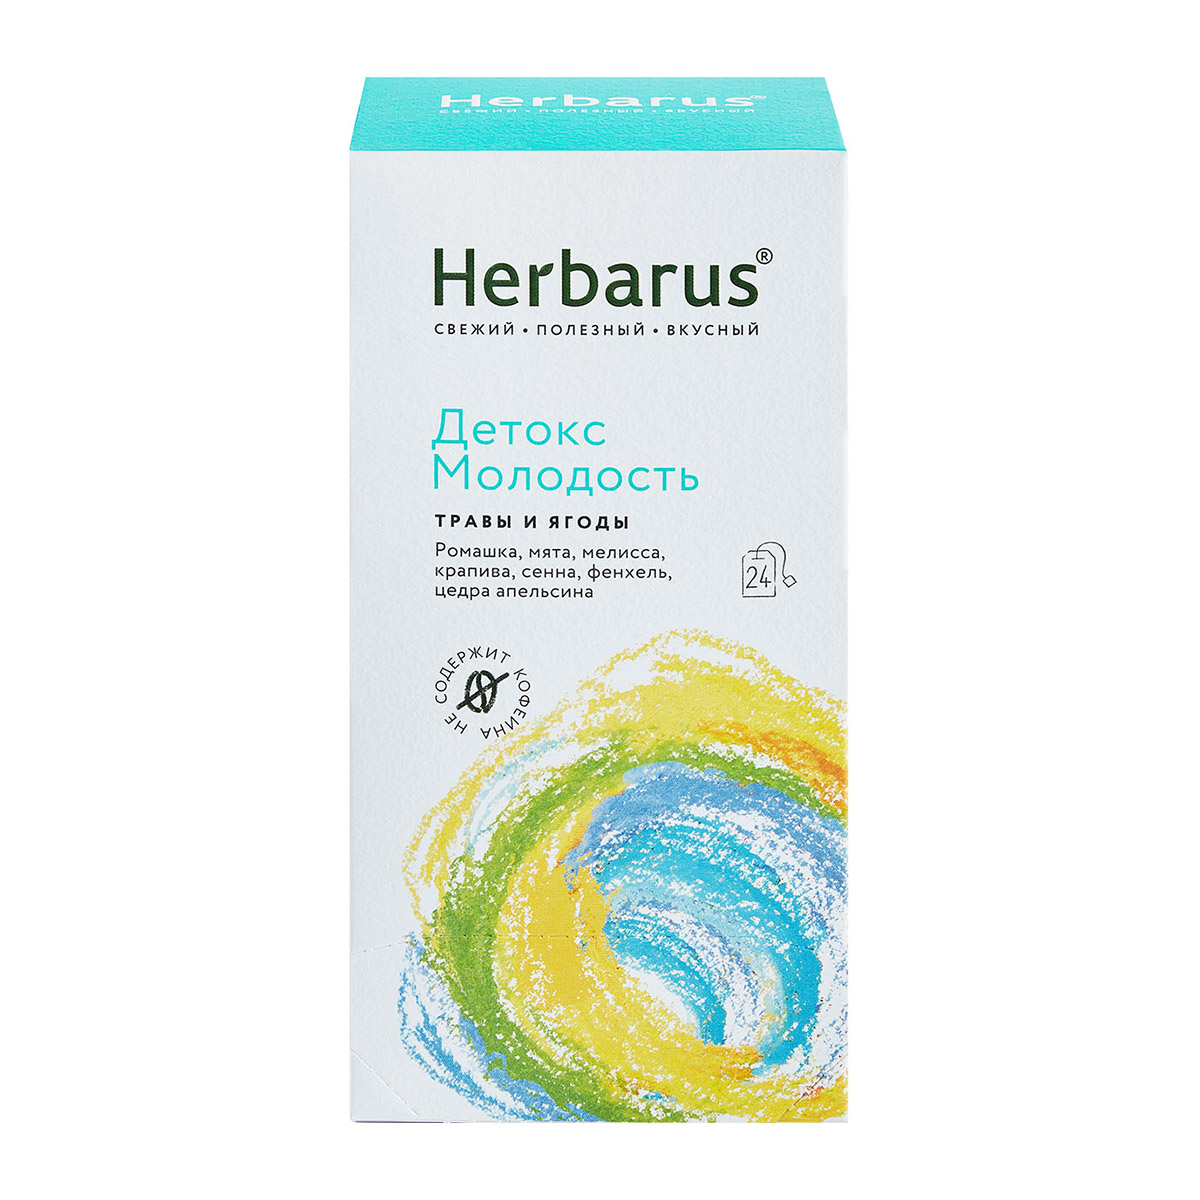 Herbarus Чайный напиток Детокс и молодость, 24 х 1,8 г (Herbarus, Травы и ягоды) чайный напиток herbarus имбирная энергия 50 г